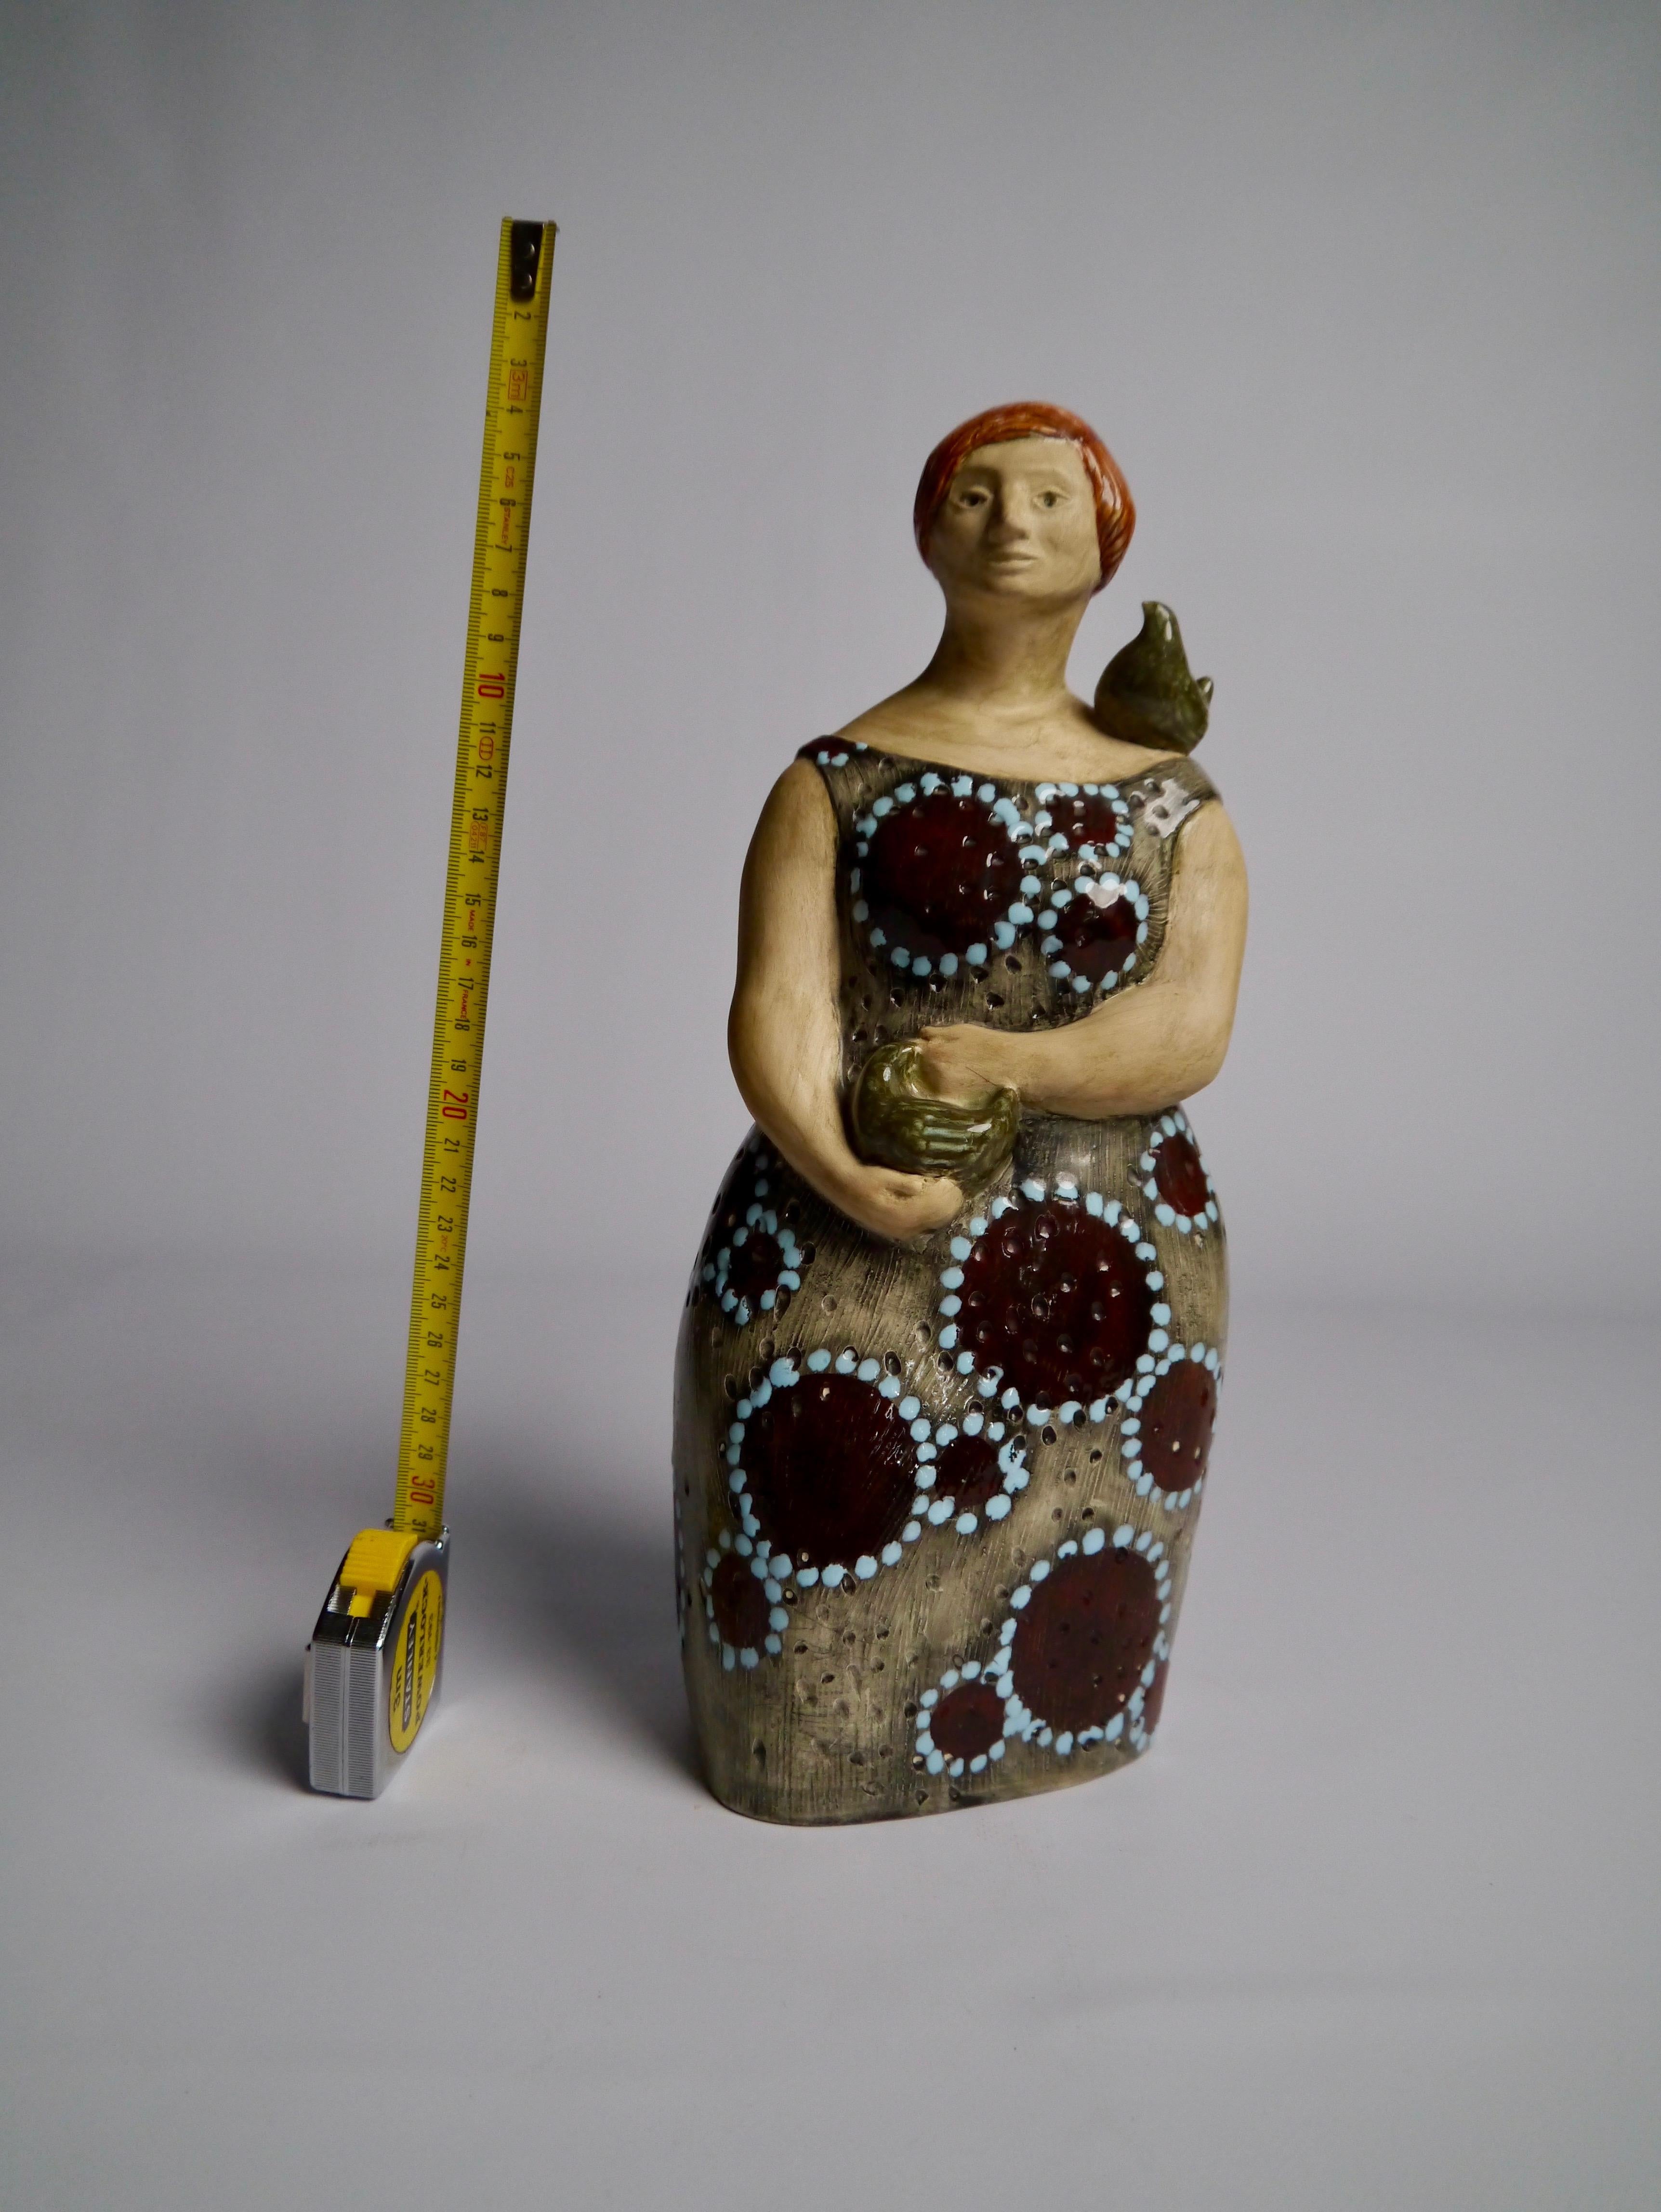 Swedish Tall Rare Ceramic Figure by Olle Alberius for Rörstrand